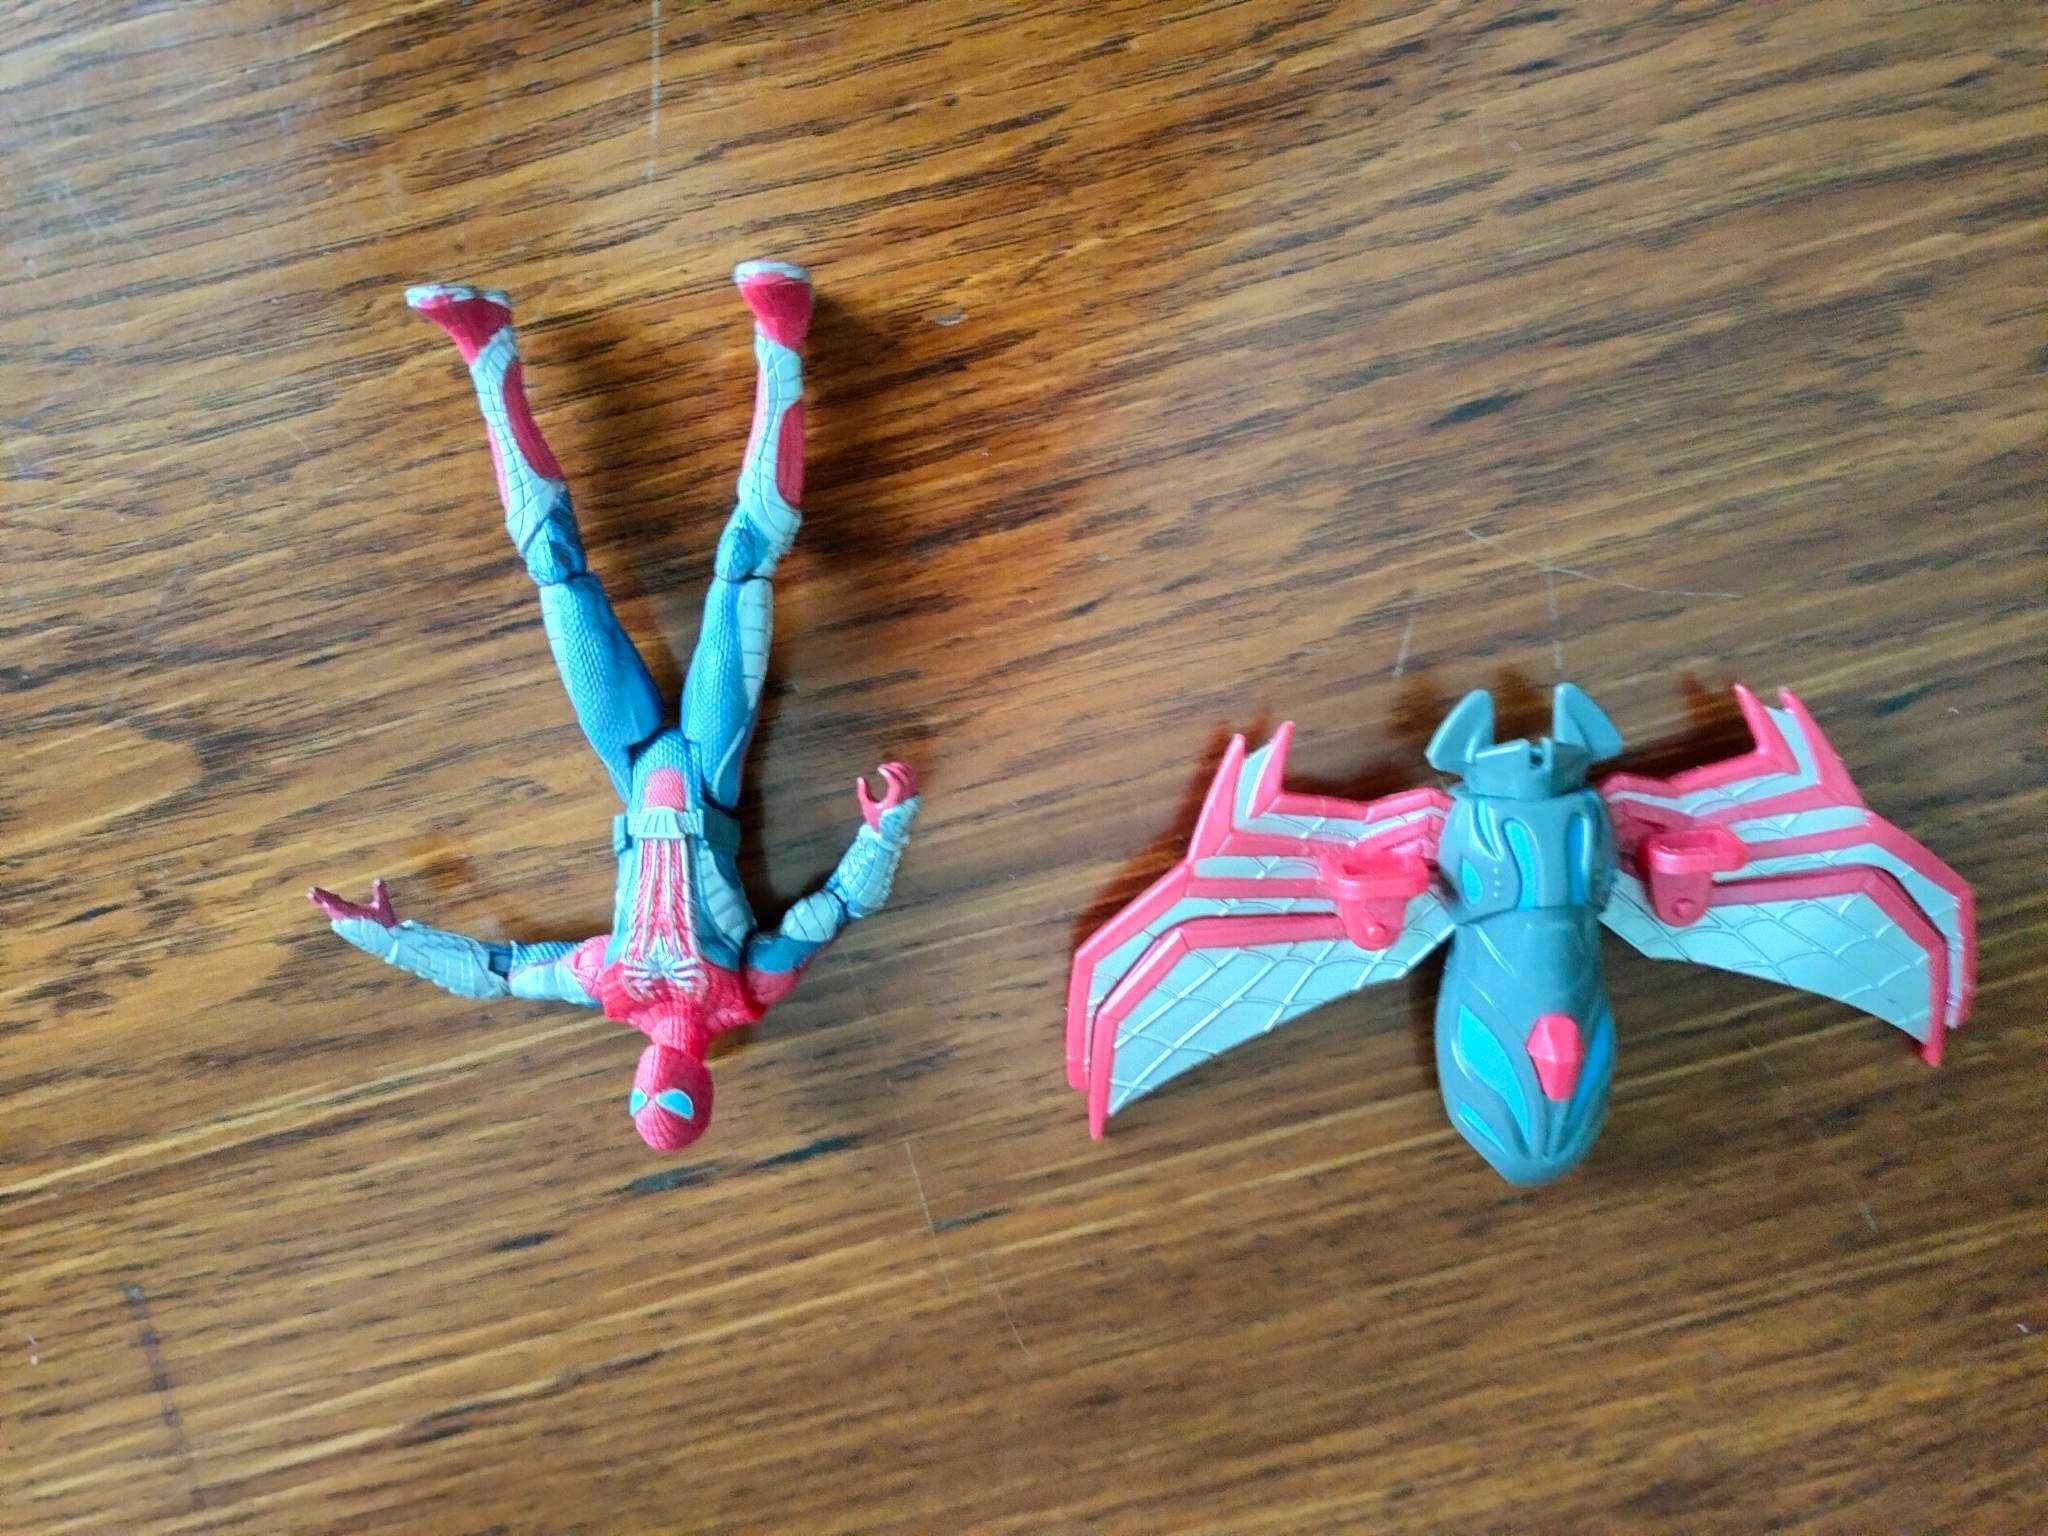 Amazing Spider-Man Concept Series Missile Attack